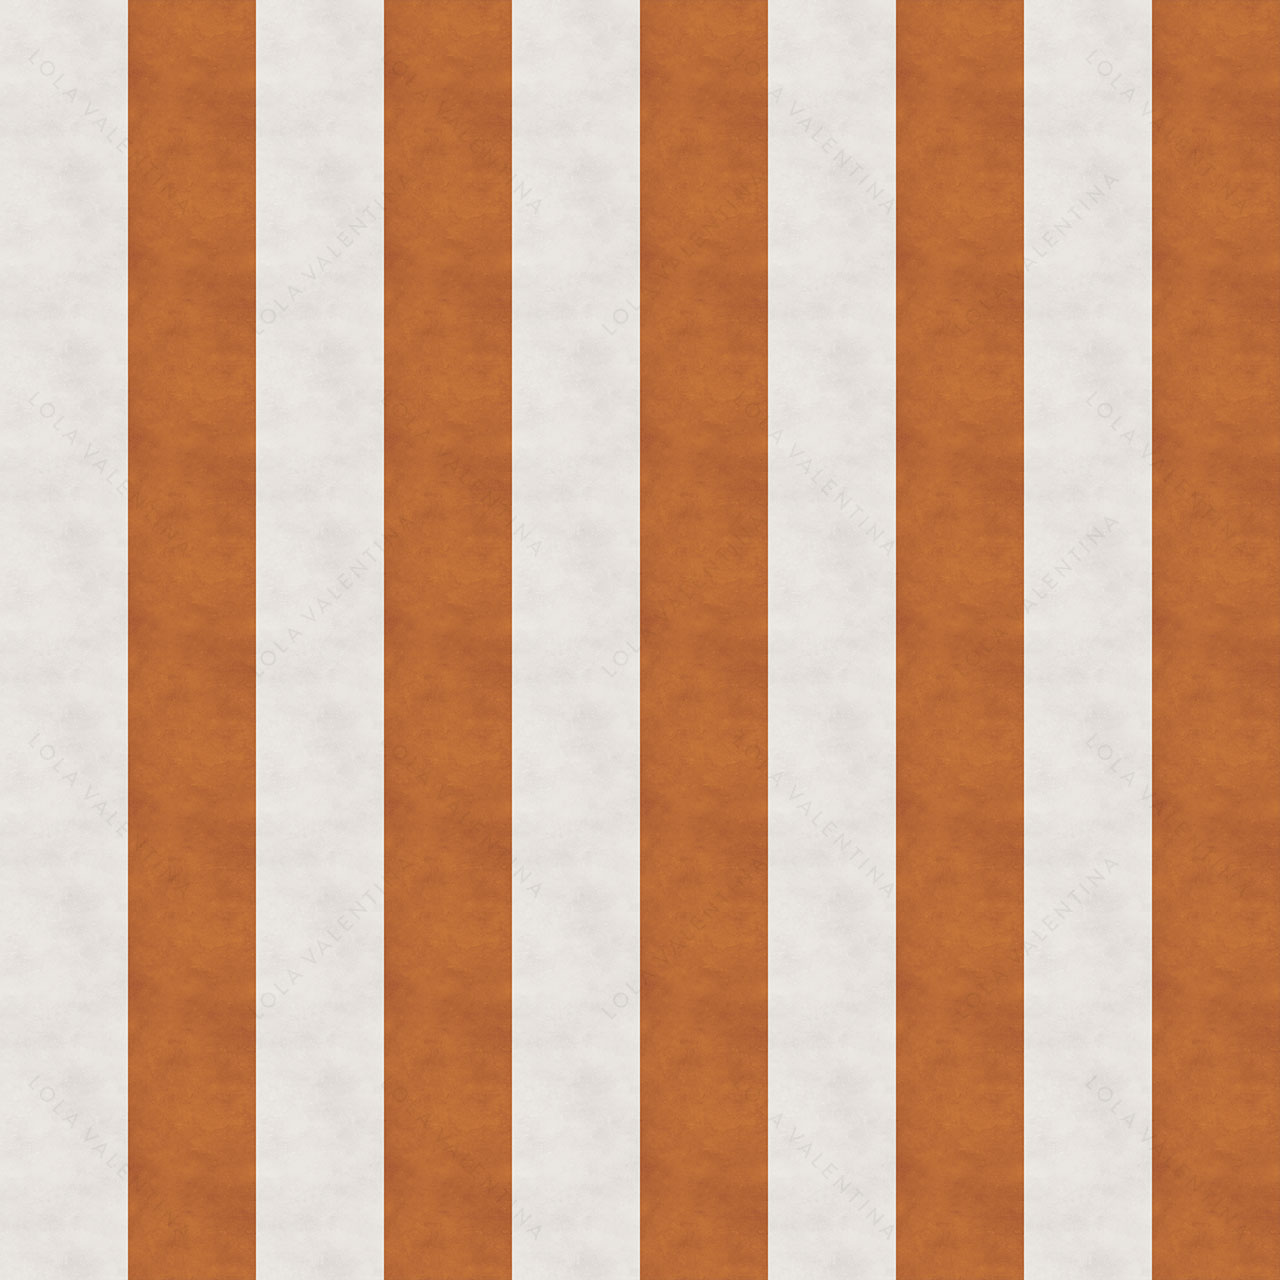 Copper-Orange-Brown-Stripes-Pattern